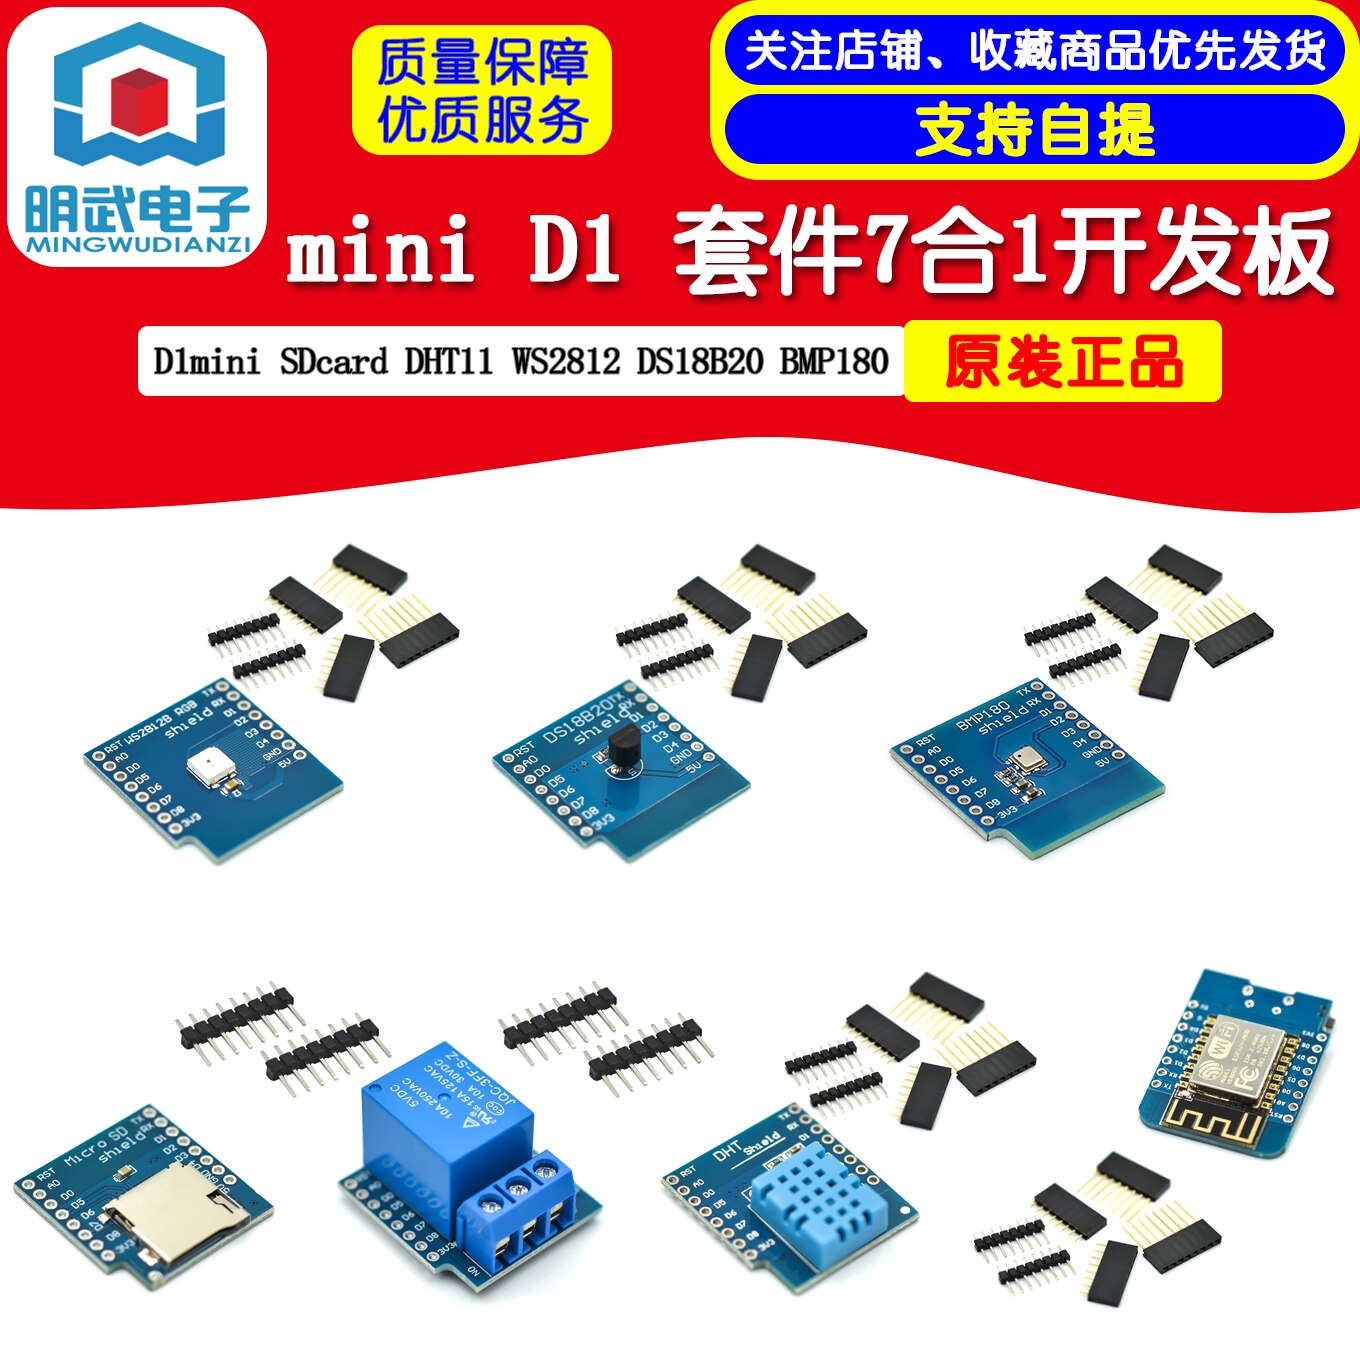 mini D1 kit 7 in 1 development board WS2812 DS18B20 BMP180 BMP180 SD card